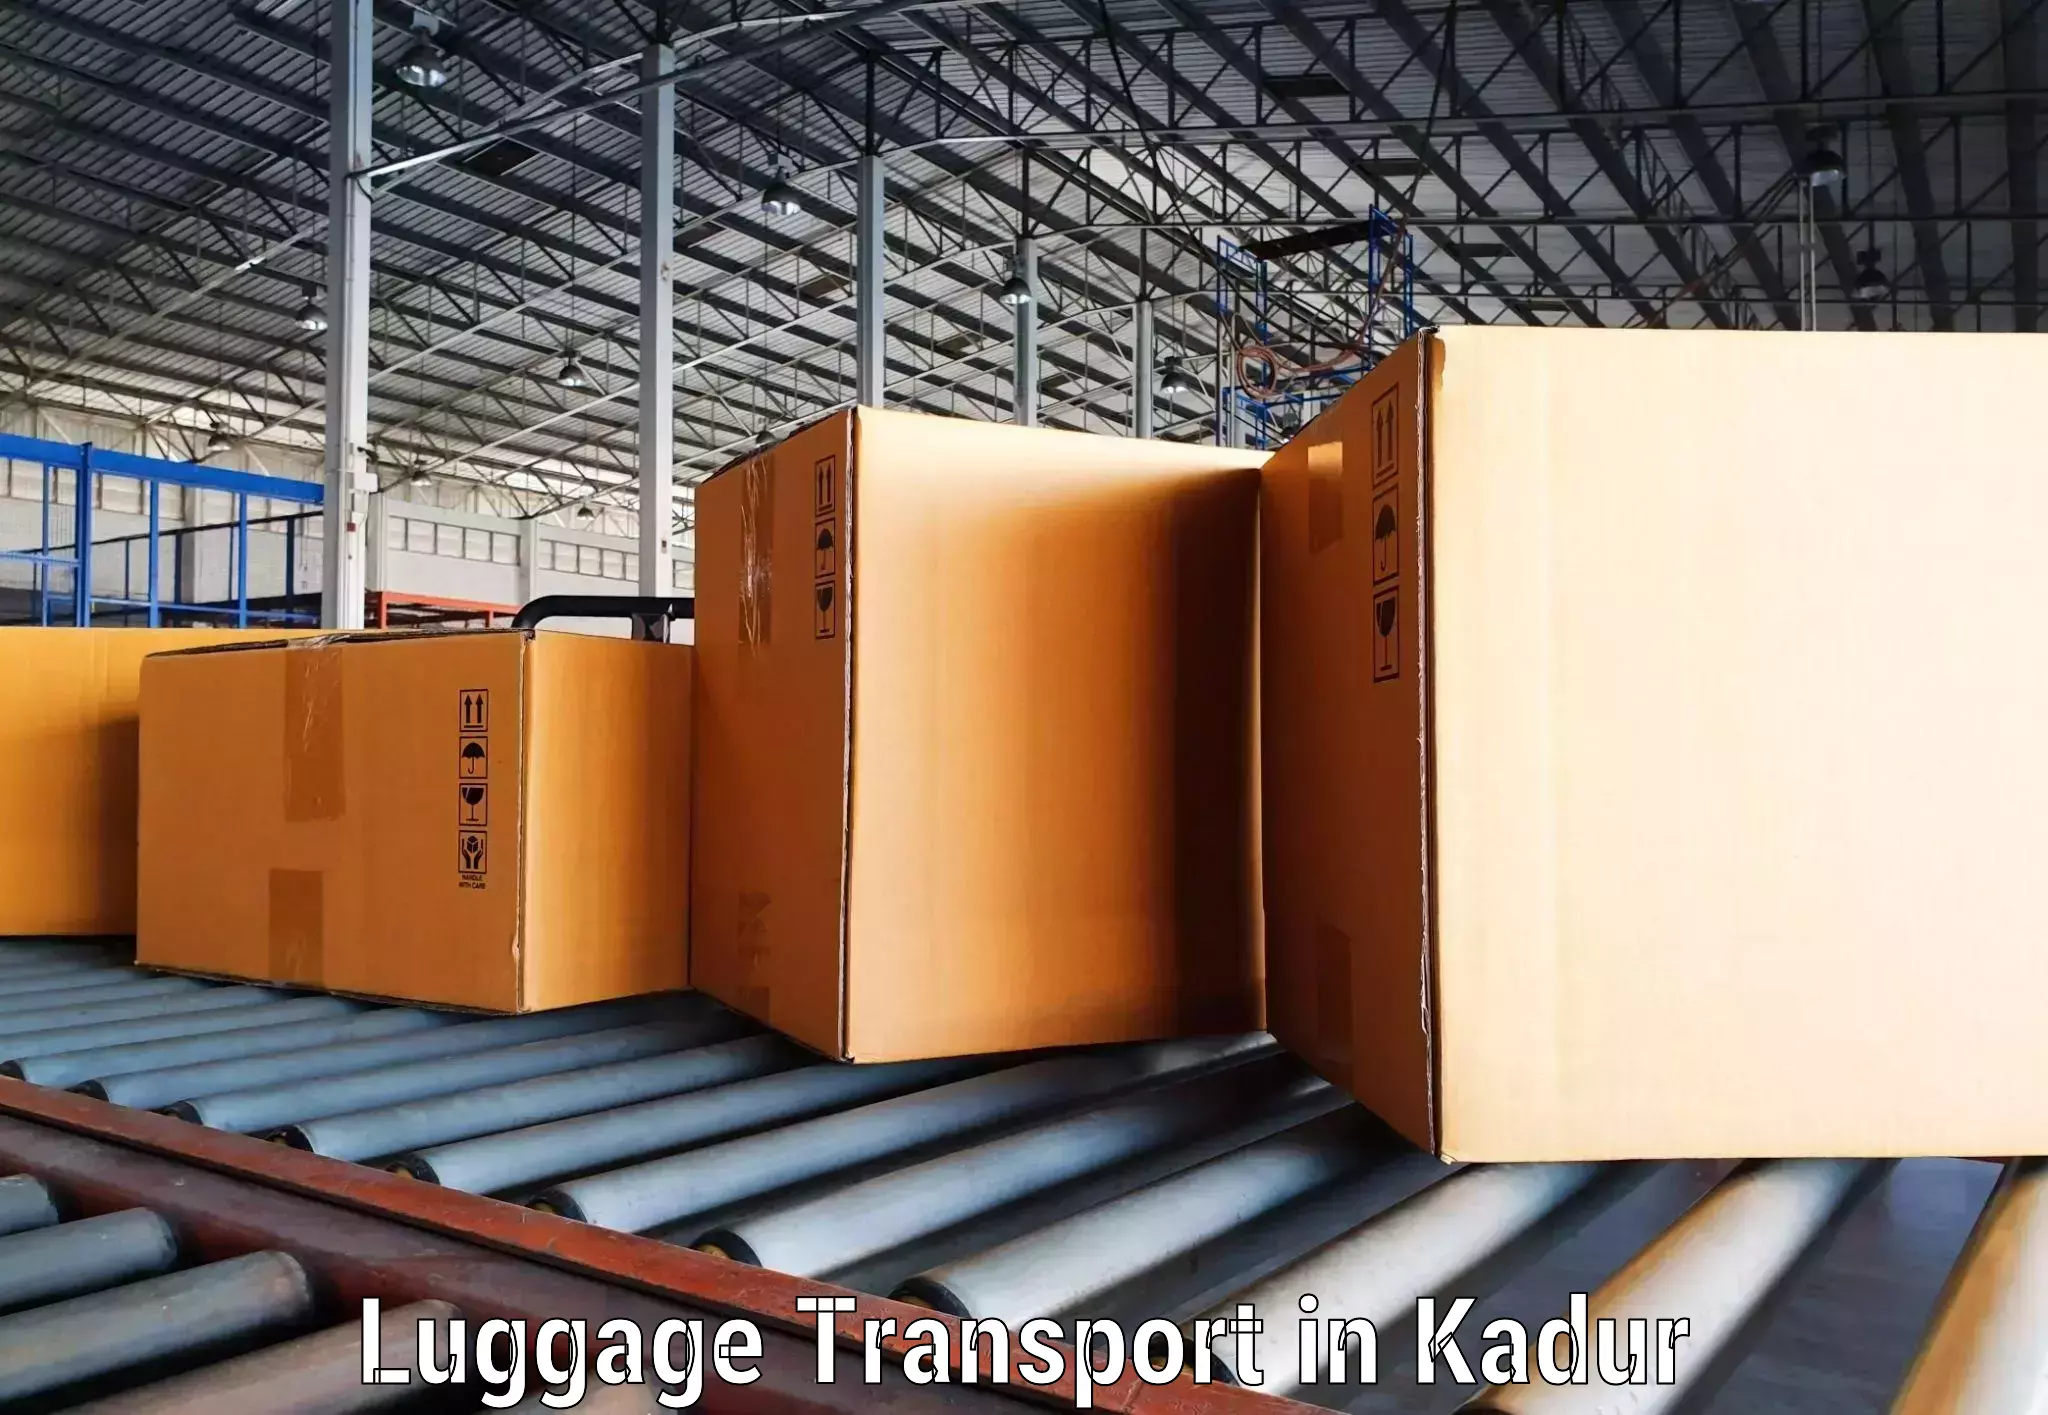 Luggage transport consultancy in Kadur